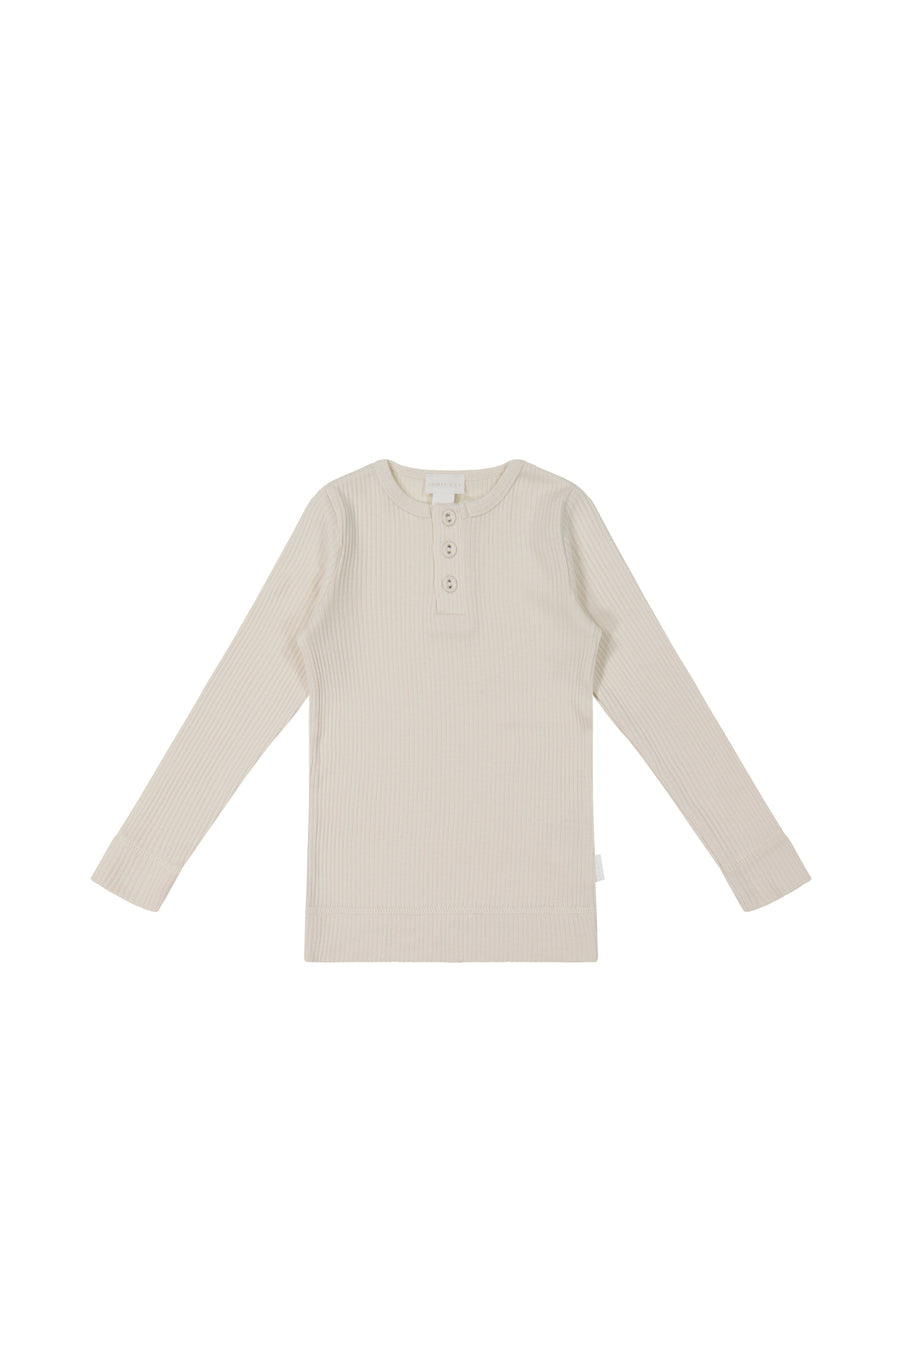 Organic Cotton Modal Long Sleeve Henley - Swan Childrens Top from Jamie Kay NZ